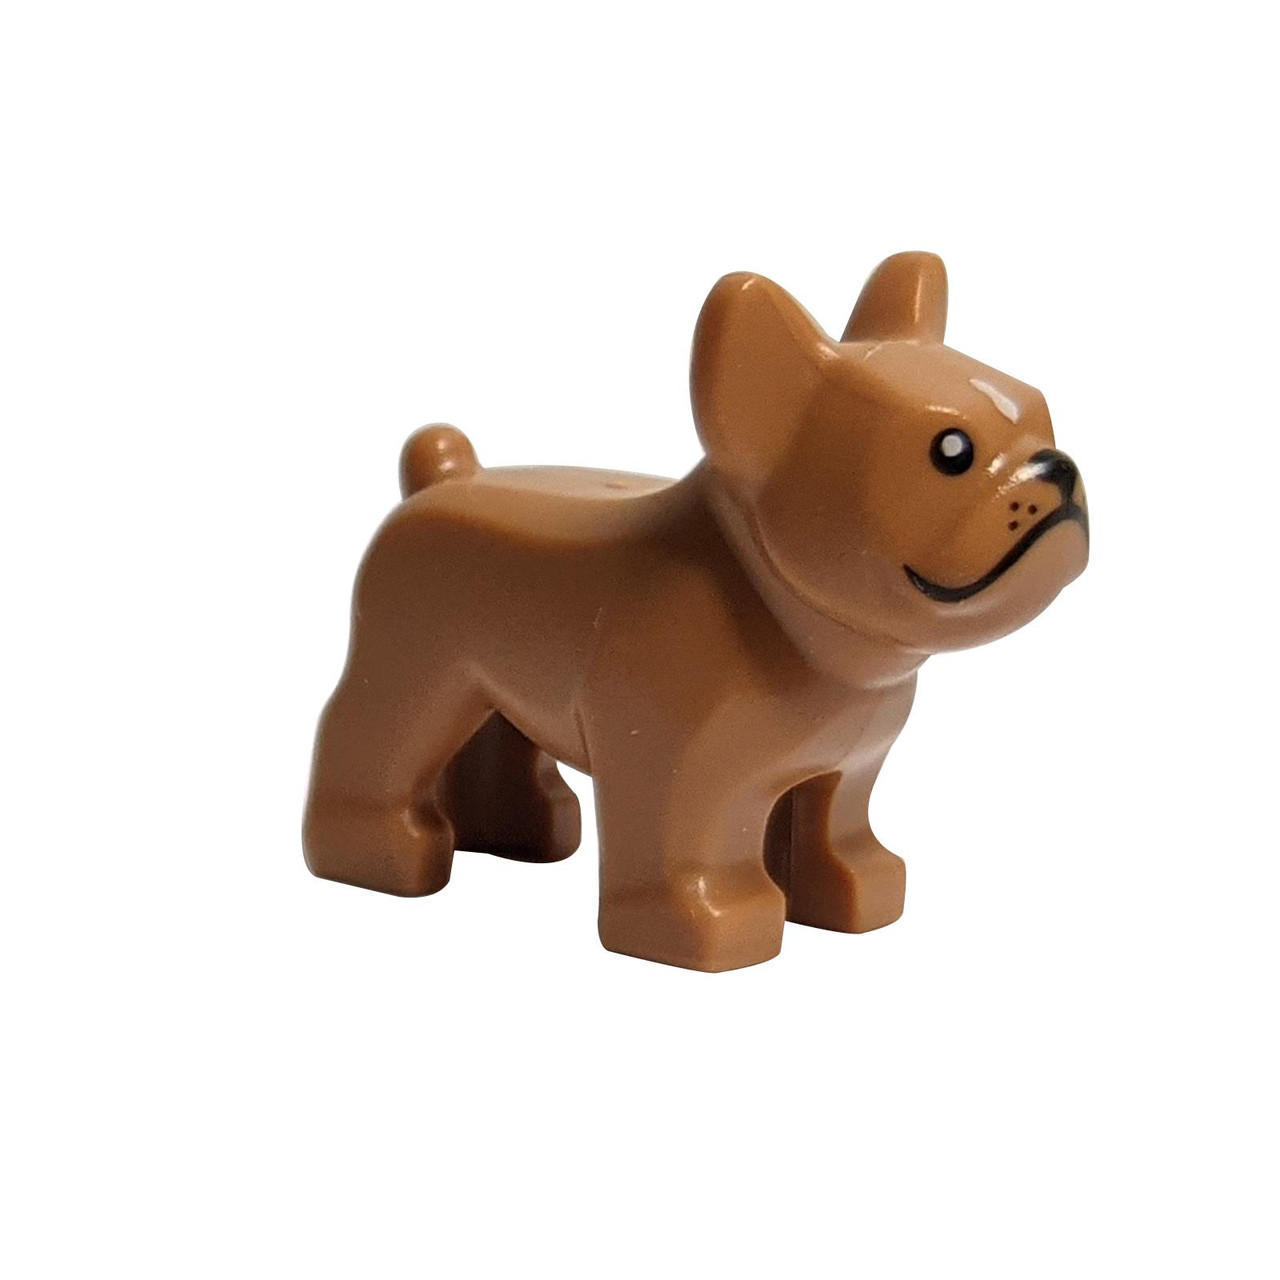 Meet Your New Playful Companion: LEGO® Animal 29602pb01 French Bulldog!